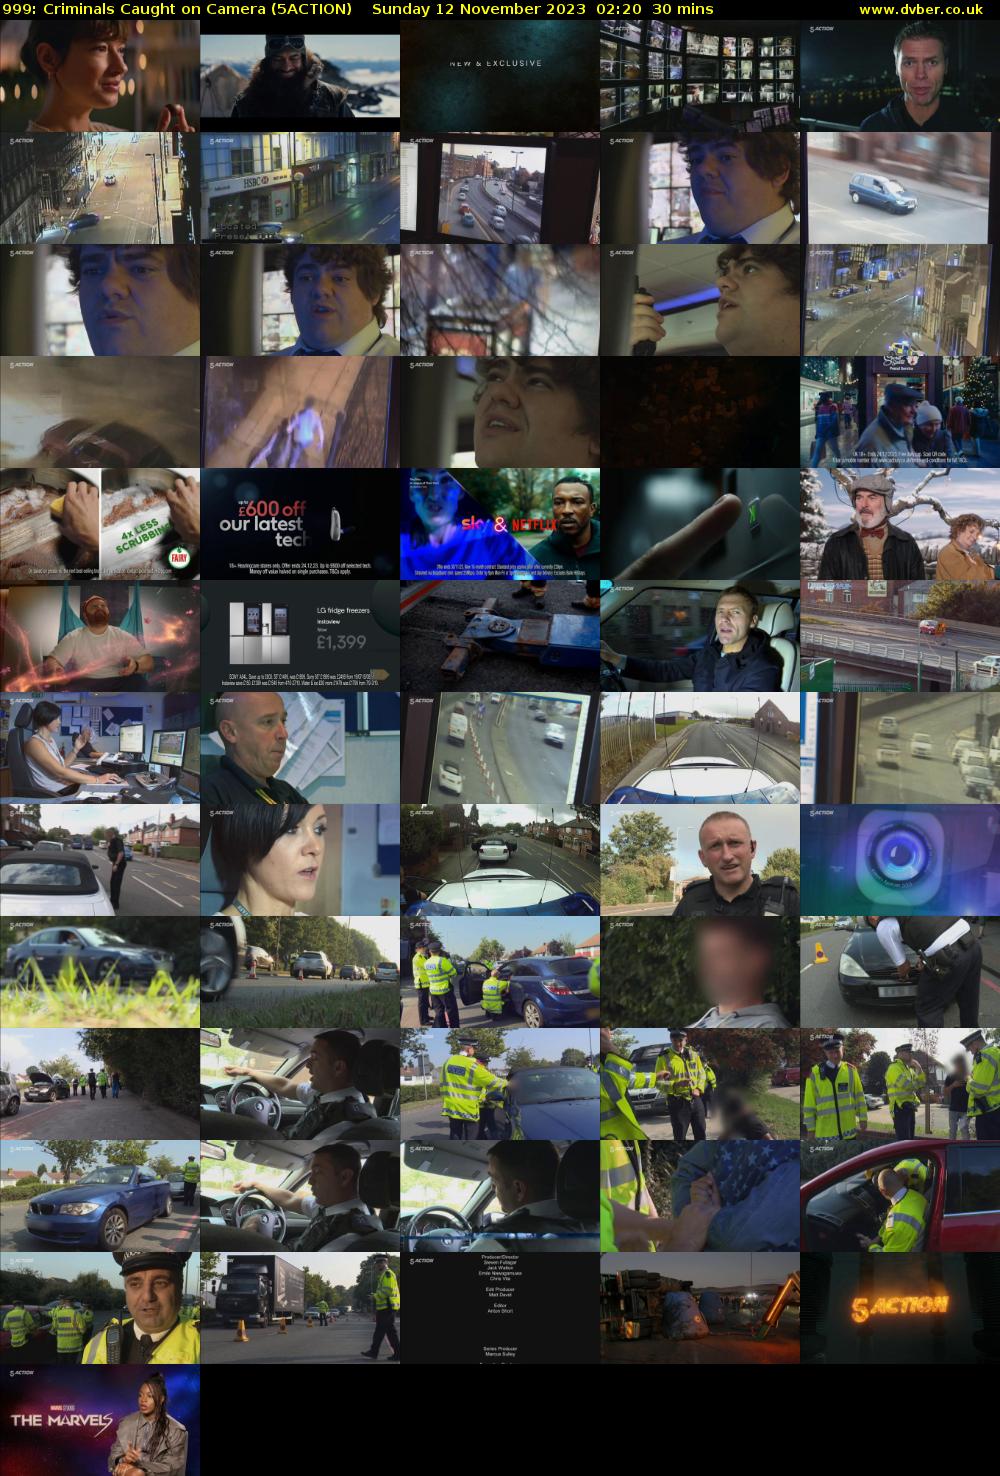 999: Criminals Caught on Camera (5ACTION) Sunday 12 November 2023 02:20 - 02:50